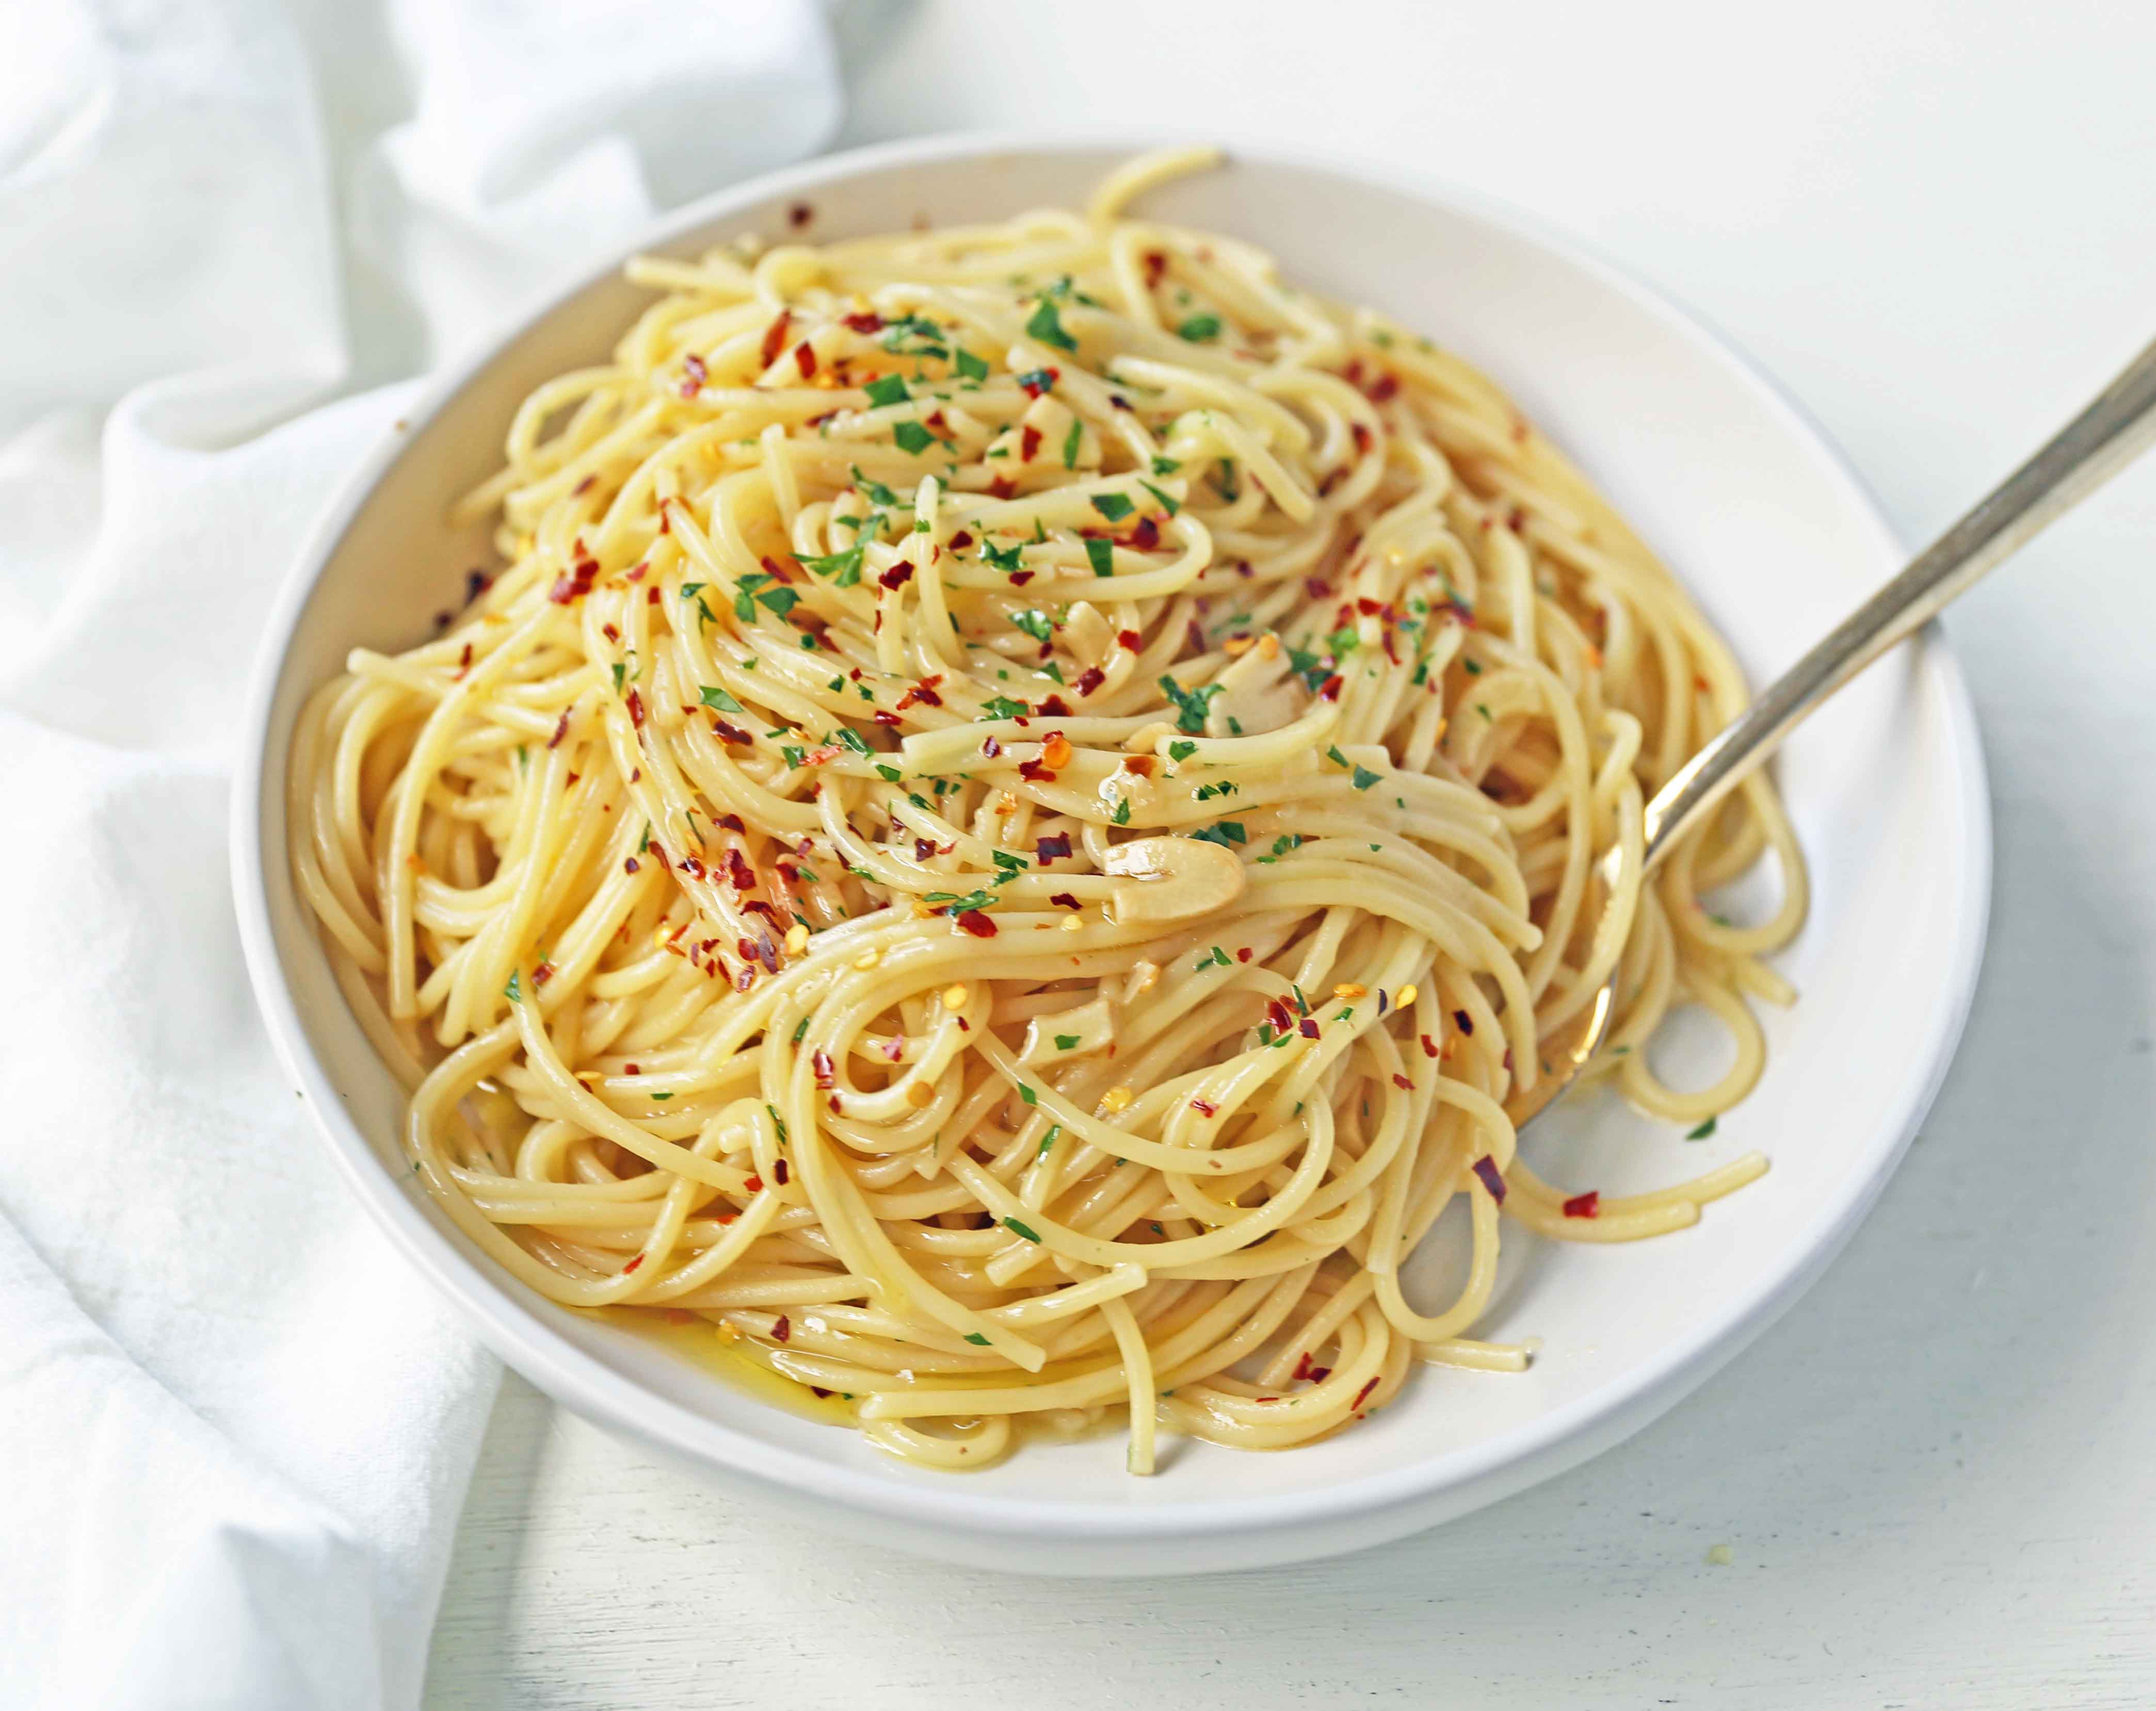 Spaghetti Aglio e Olio. Spaghetti tossed in sauteed garlic, olive oil, red pepper flakes, and fresh parsley. A quick and easy authentic pasta dish! Spaghetti with Garlic and Oil is 20 minute meal. www.modernhoney.com #pasta #spaghetti 